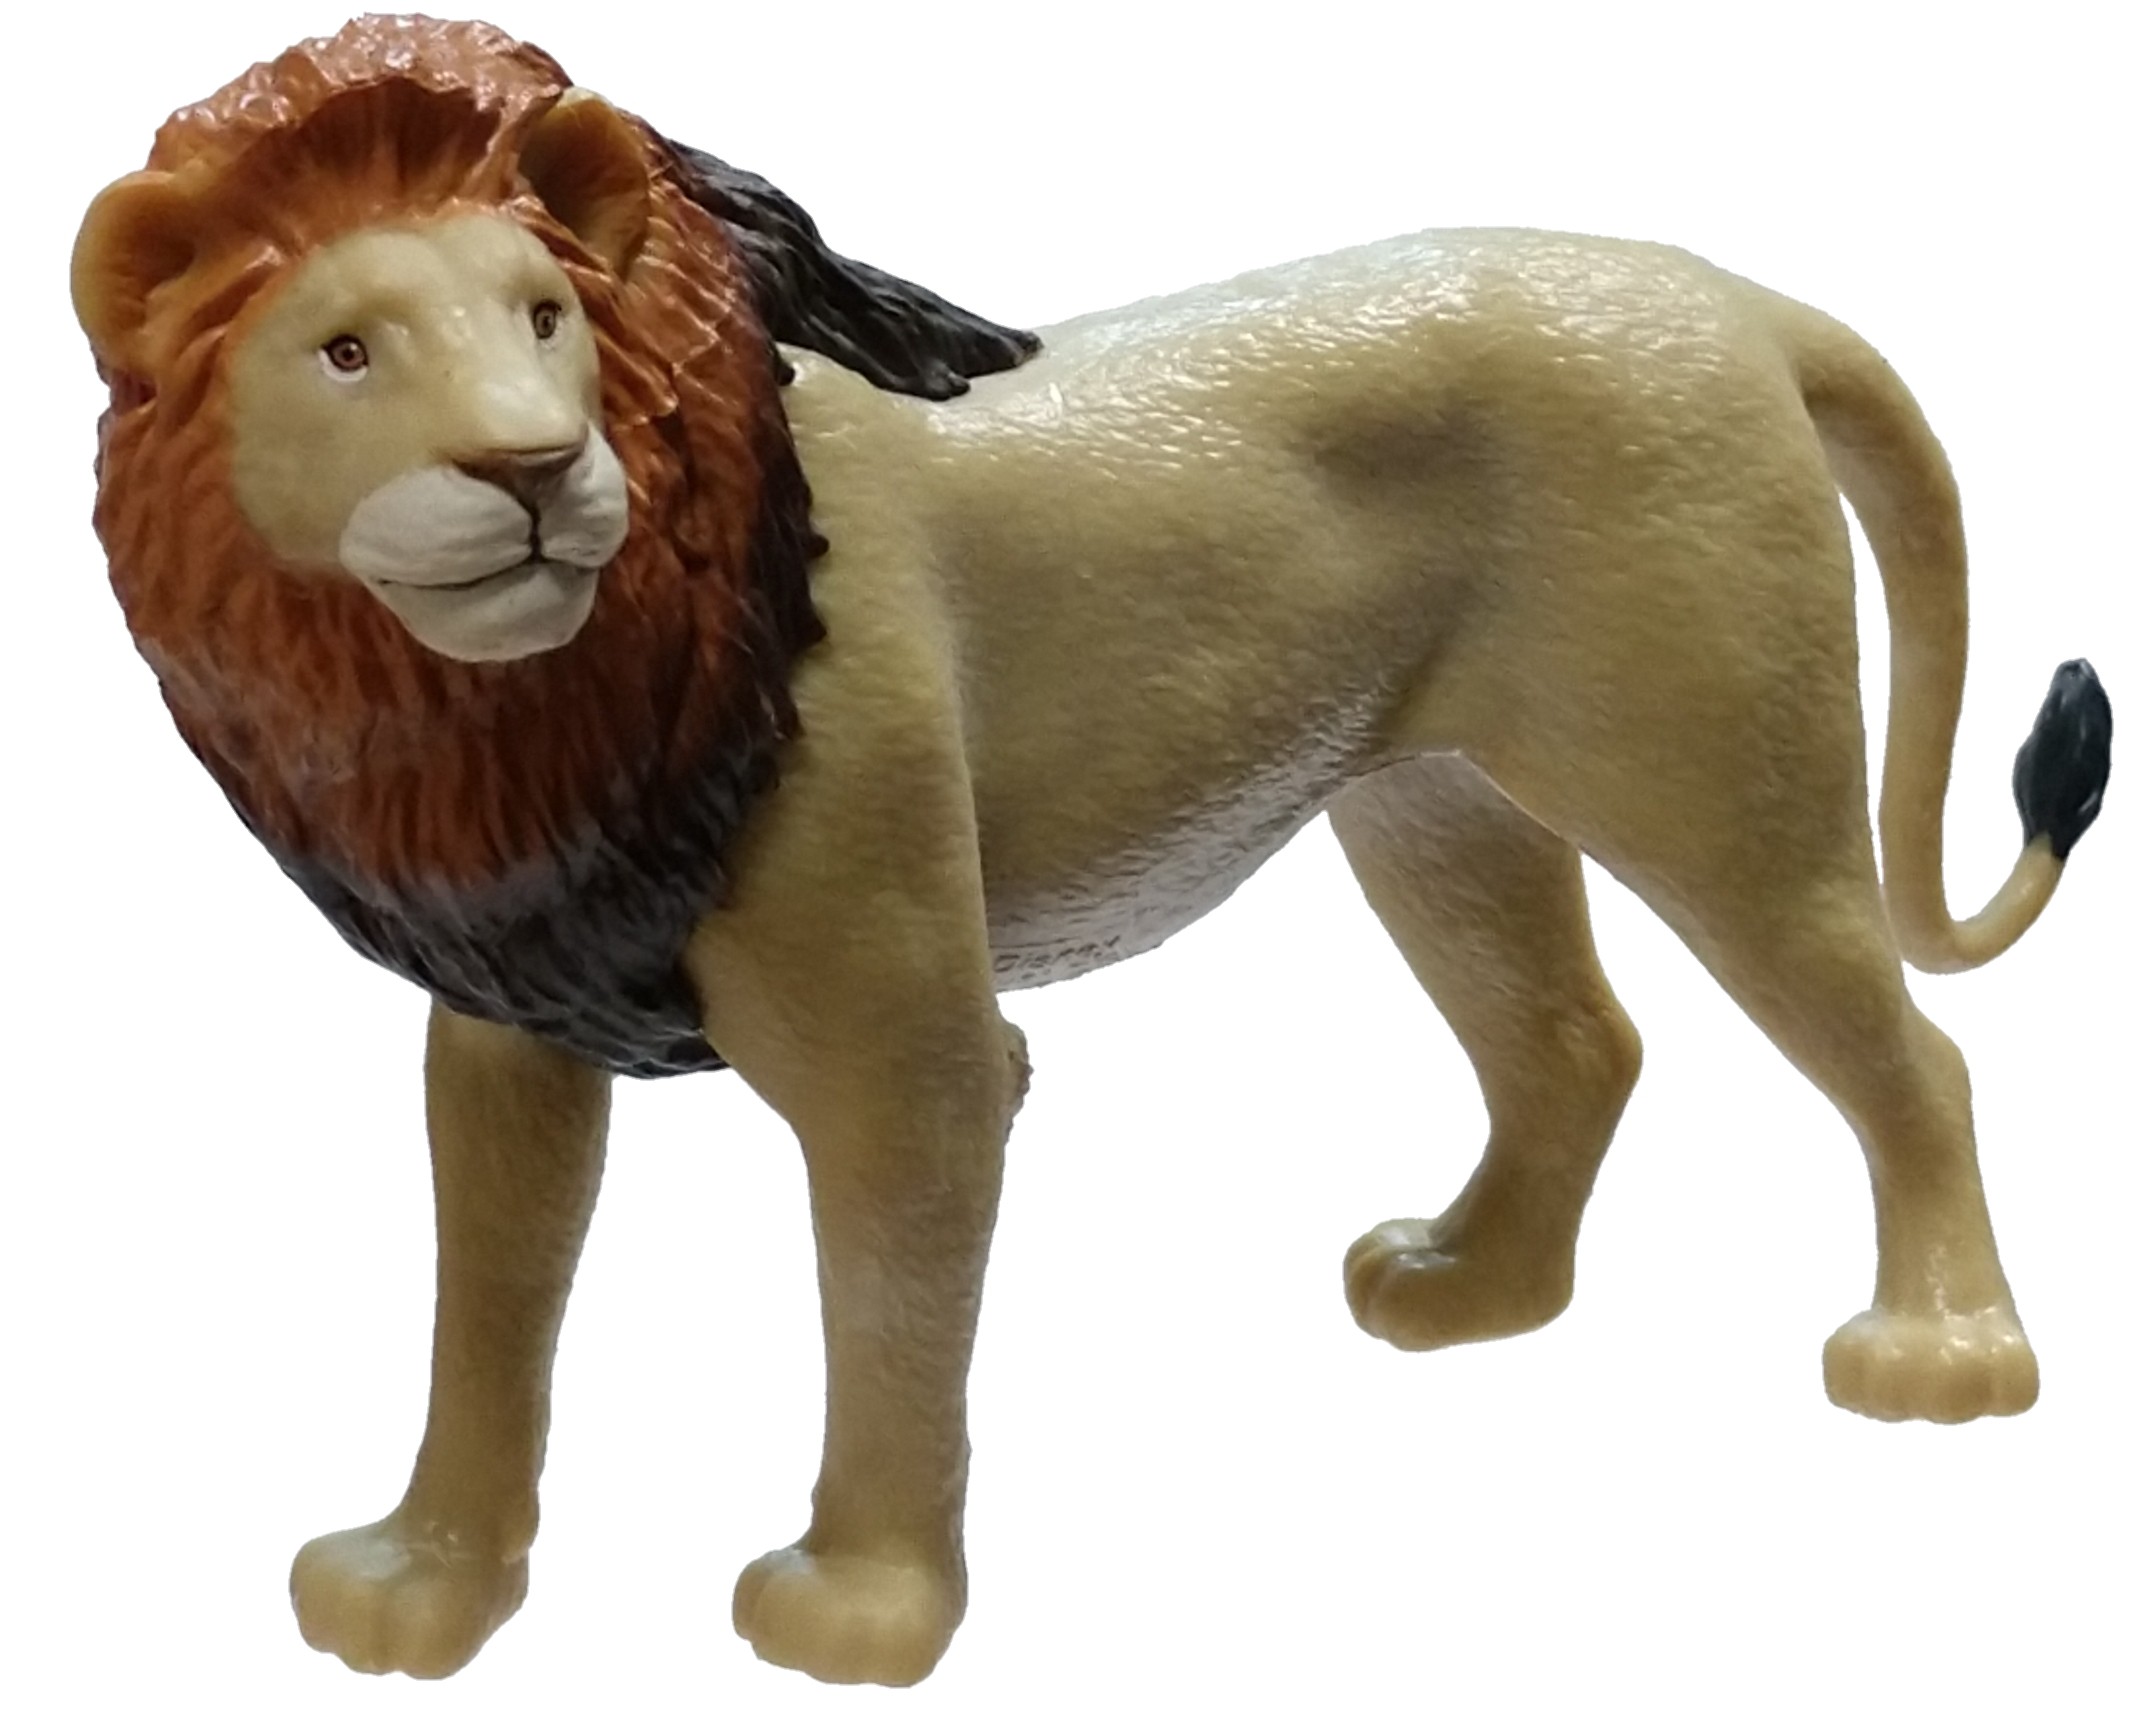 new lion king toys 2019